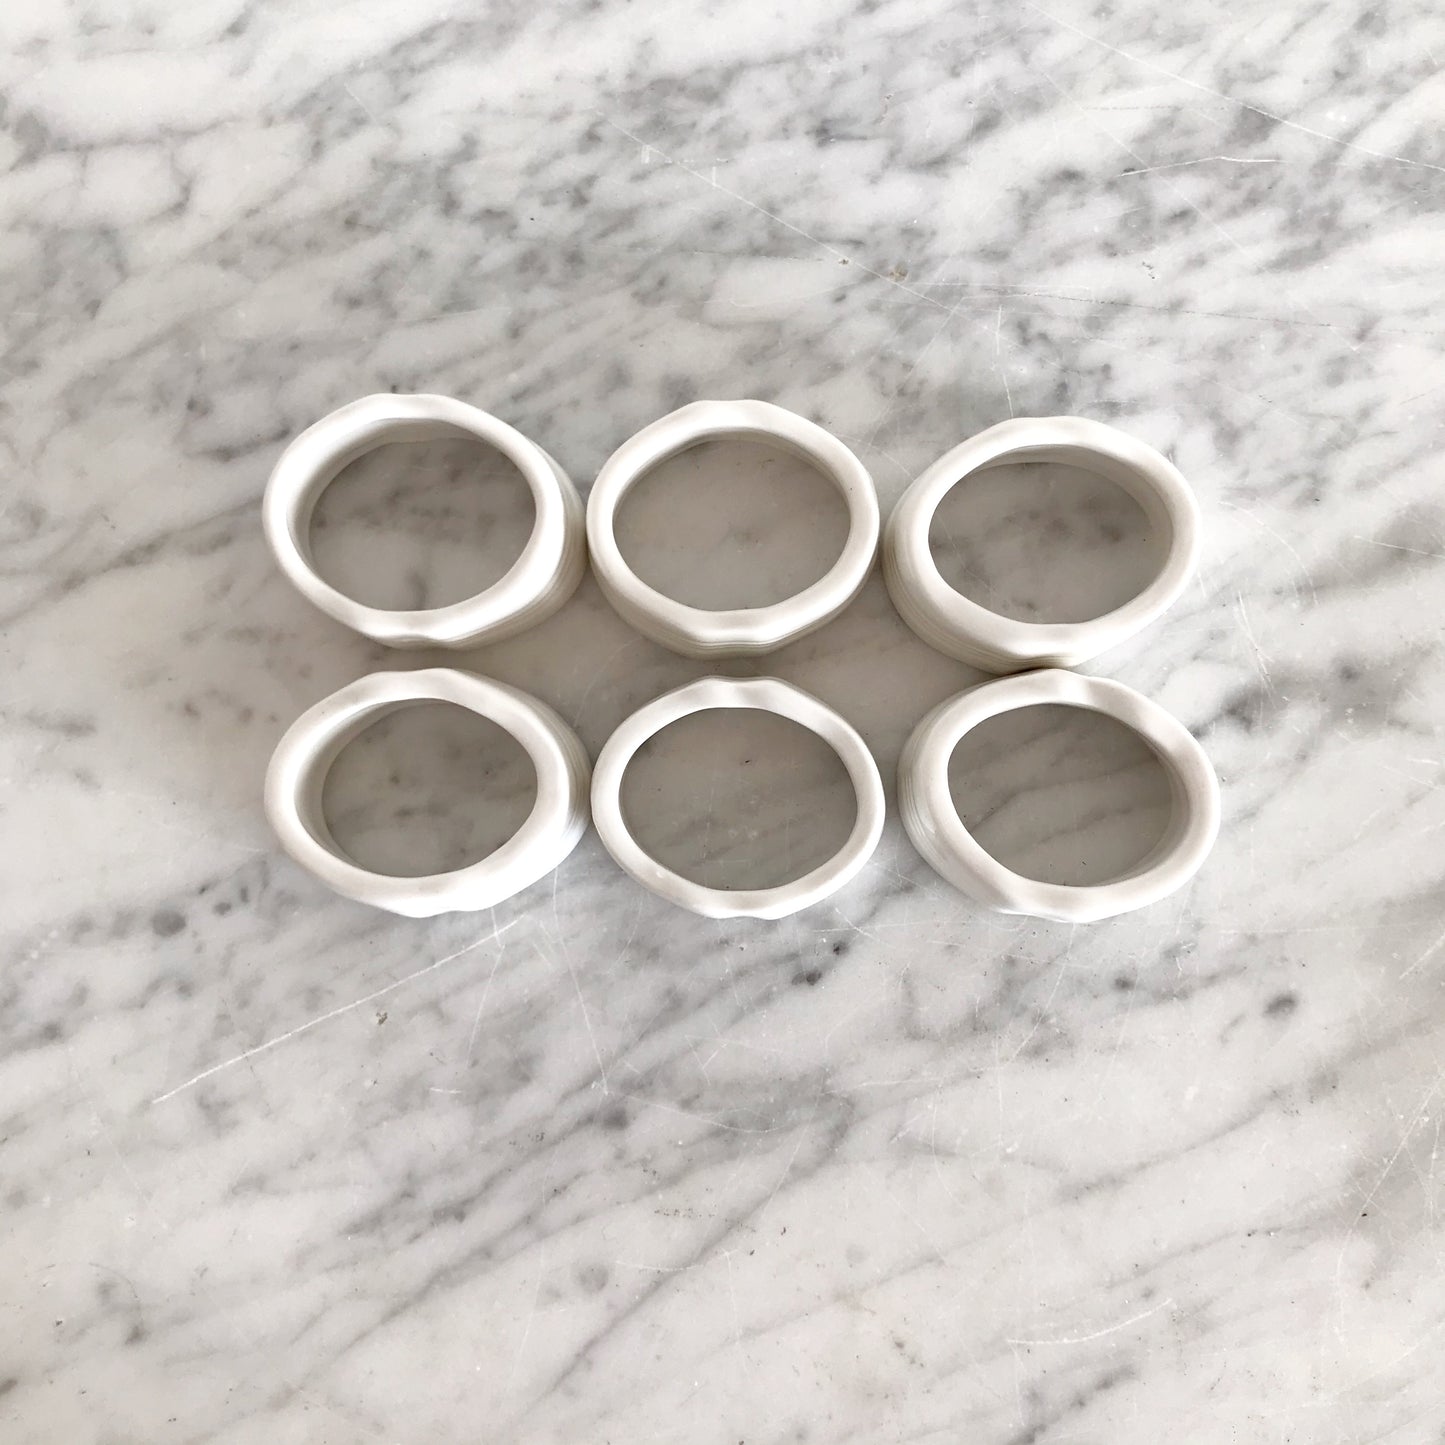 Set of 6 White Ceramic Napkin Rings